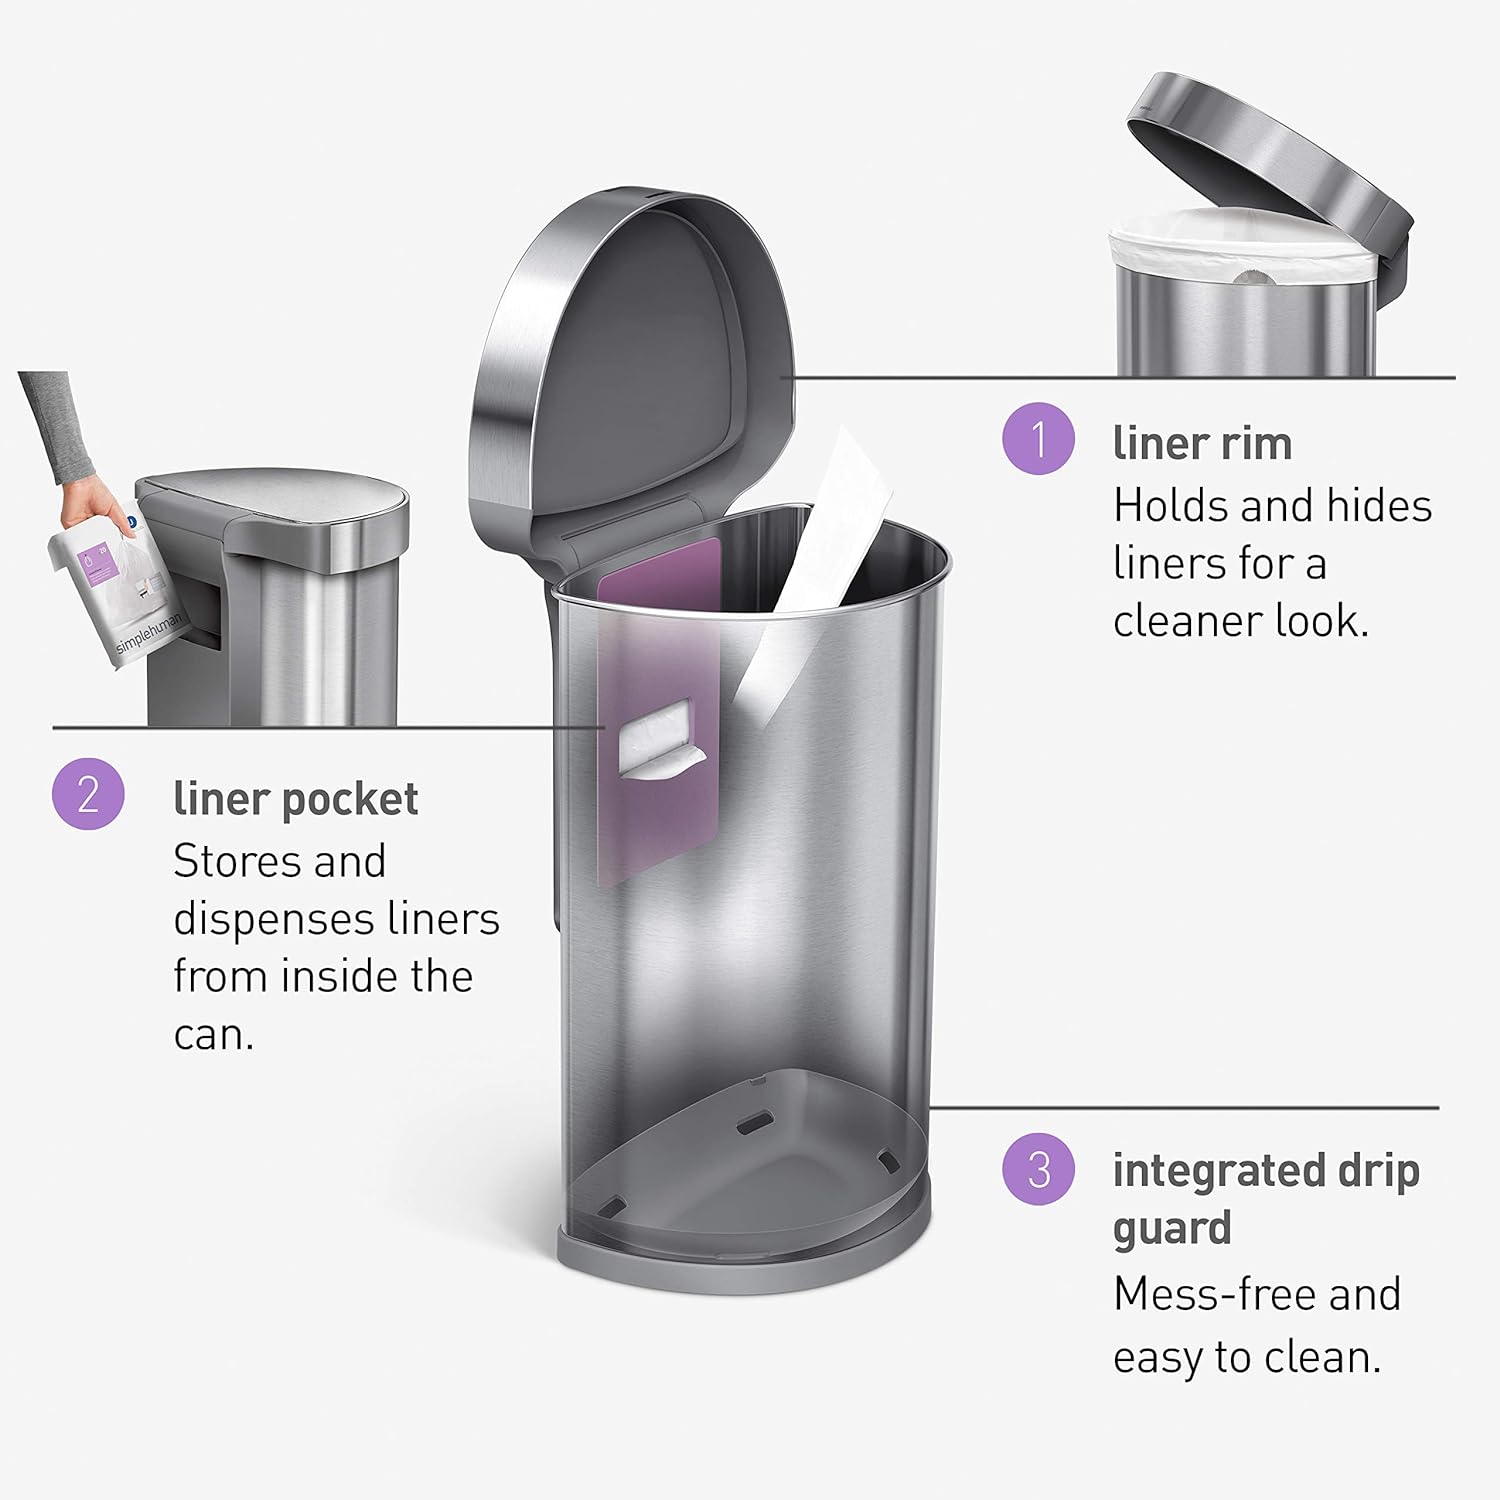 simplehuman Semi-Round Sensor Trash Can, 45 Liters - Brushed Stainless Steel